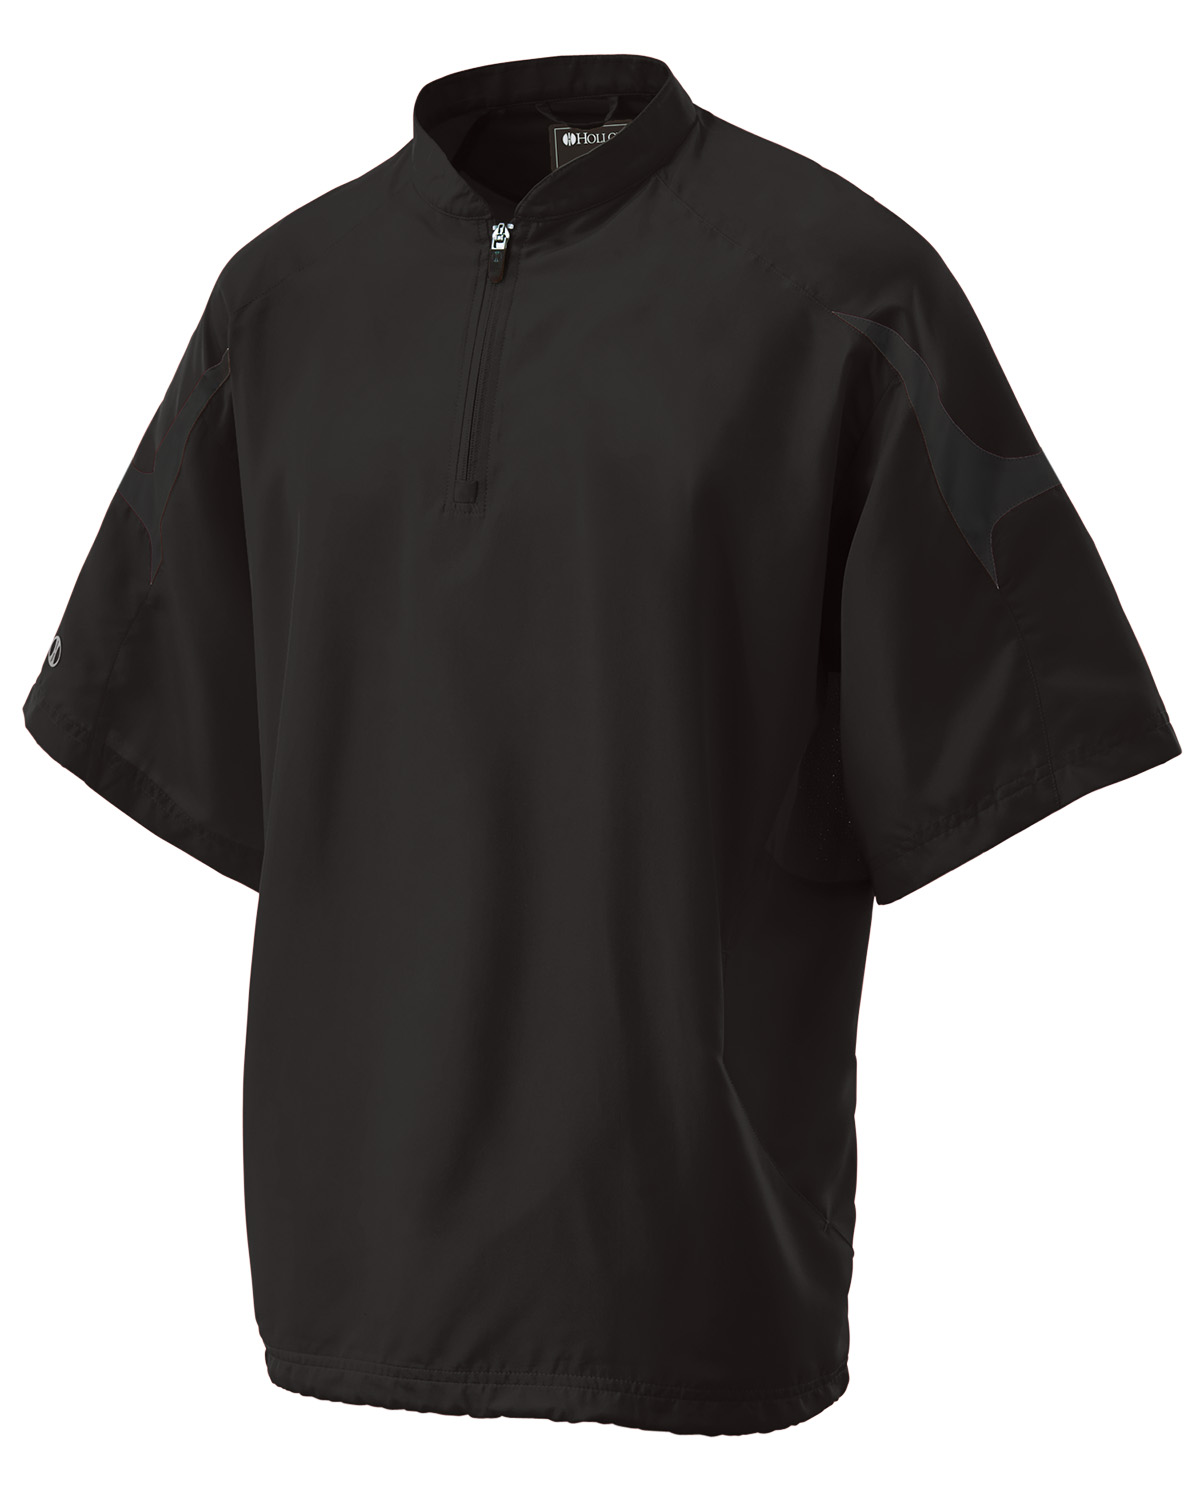 Holloway 222285 - Youth Polyester Short Sleeve Equalizer Jacket